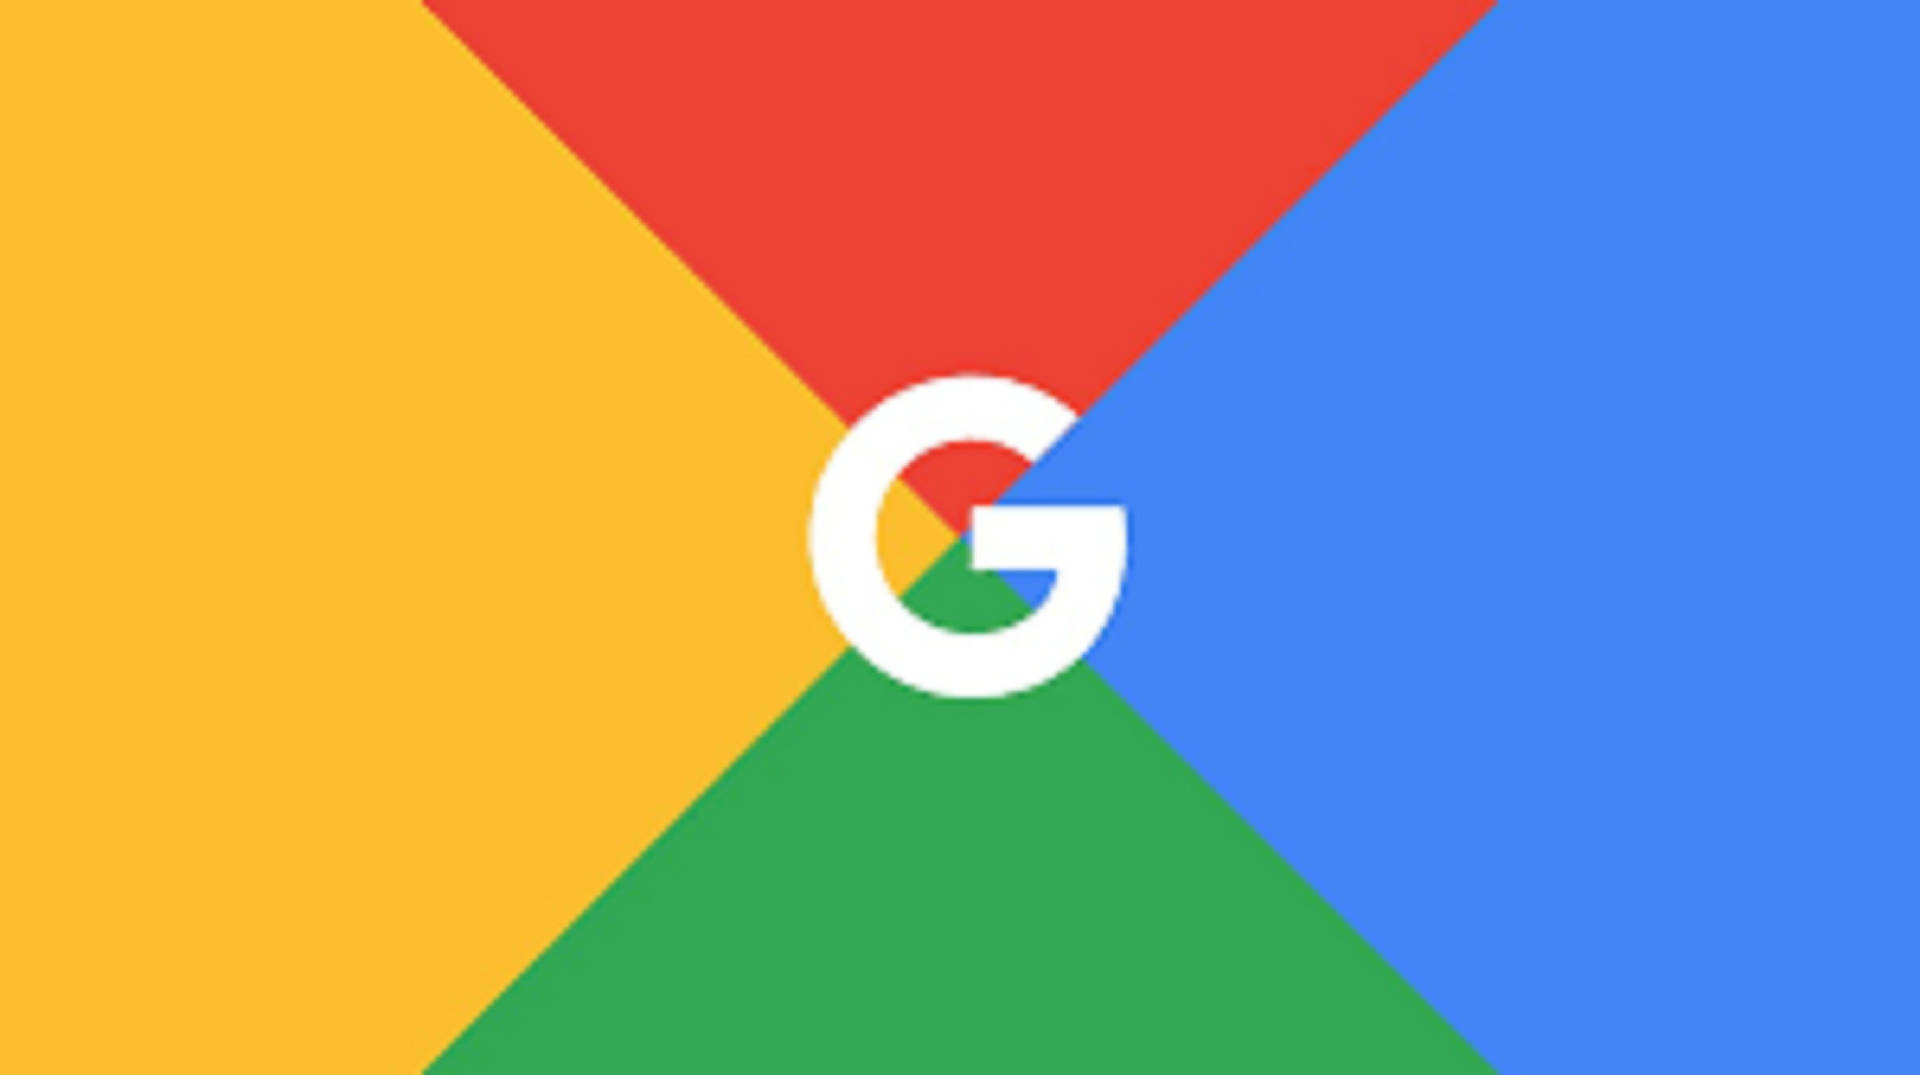 Google Logo And Color Branding Wallpaper